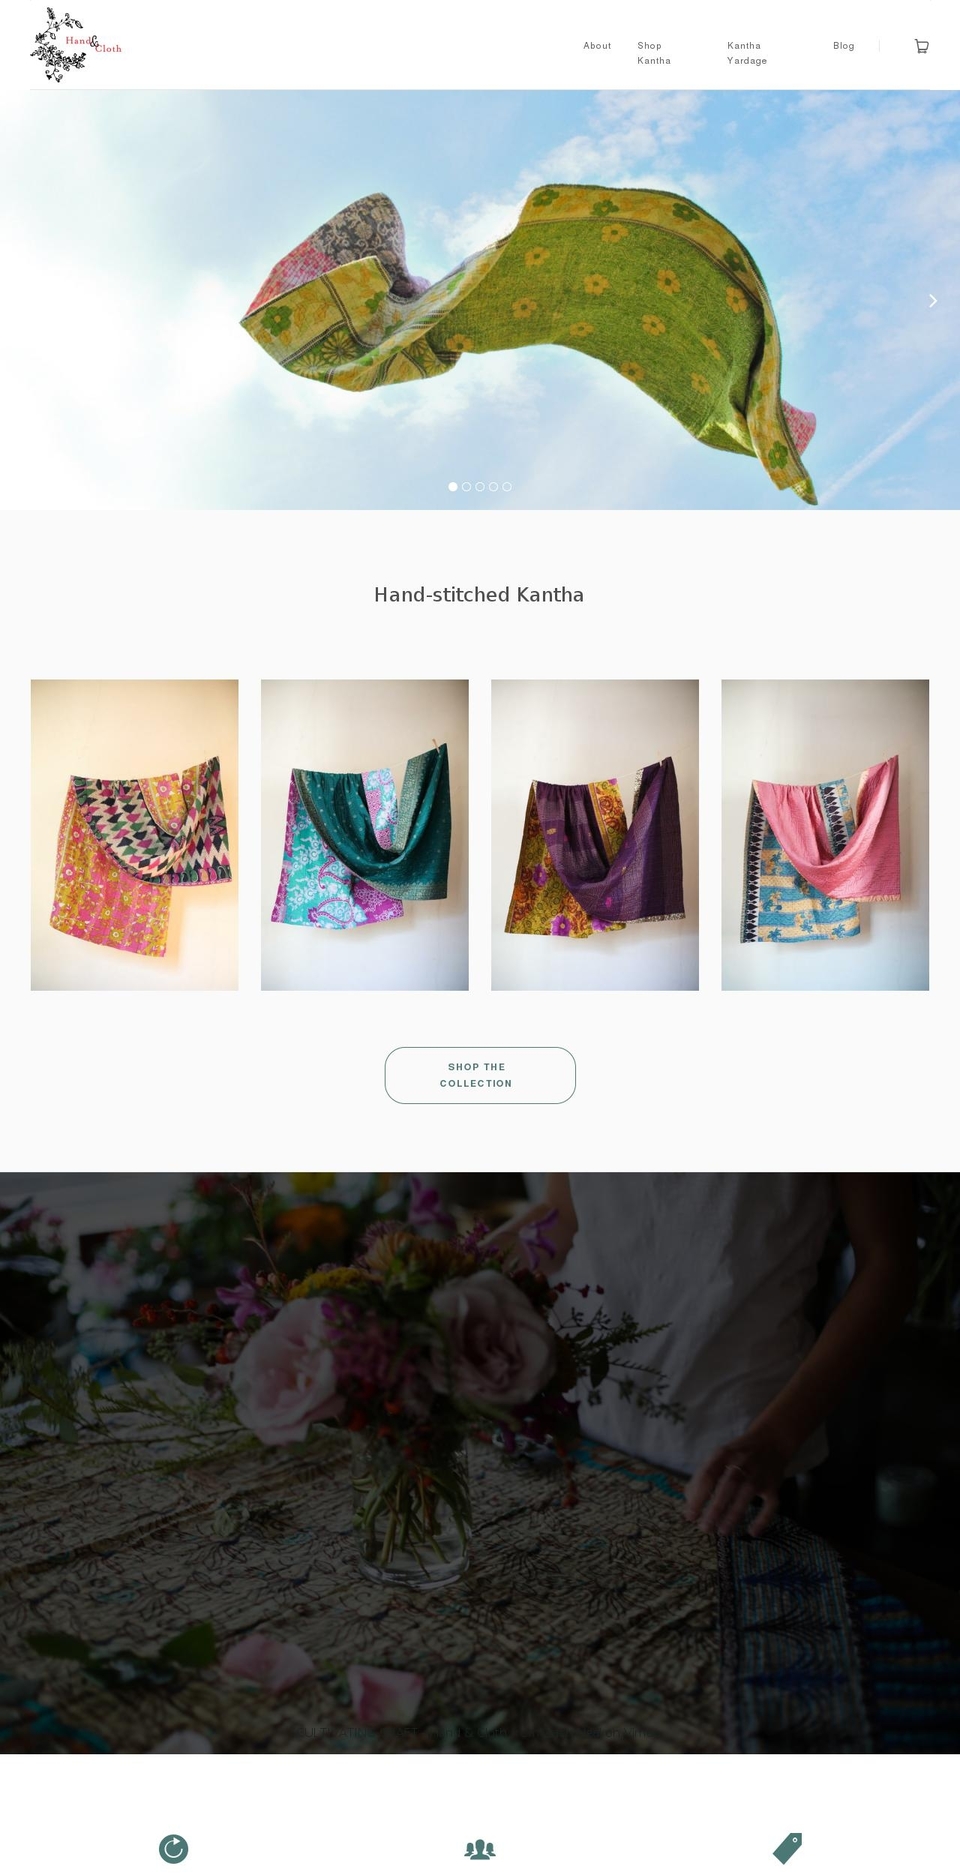 handandcloth.mobi shopify website screenshot